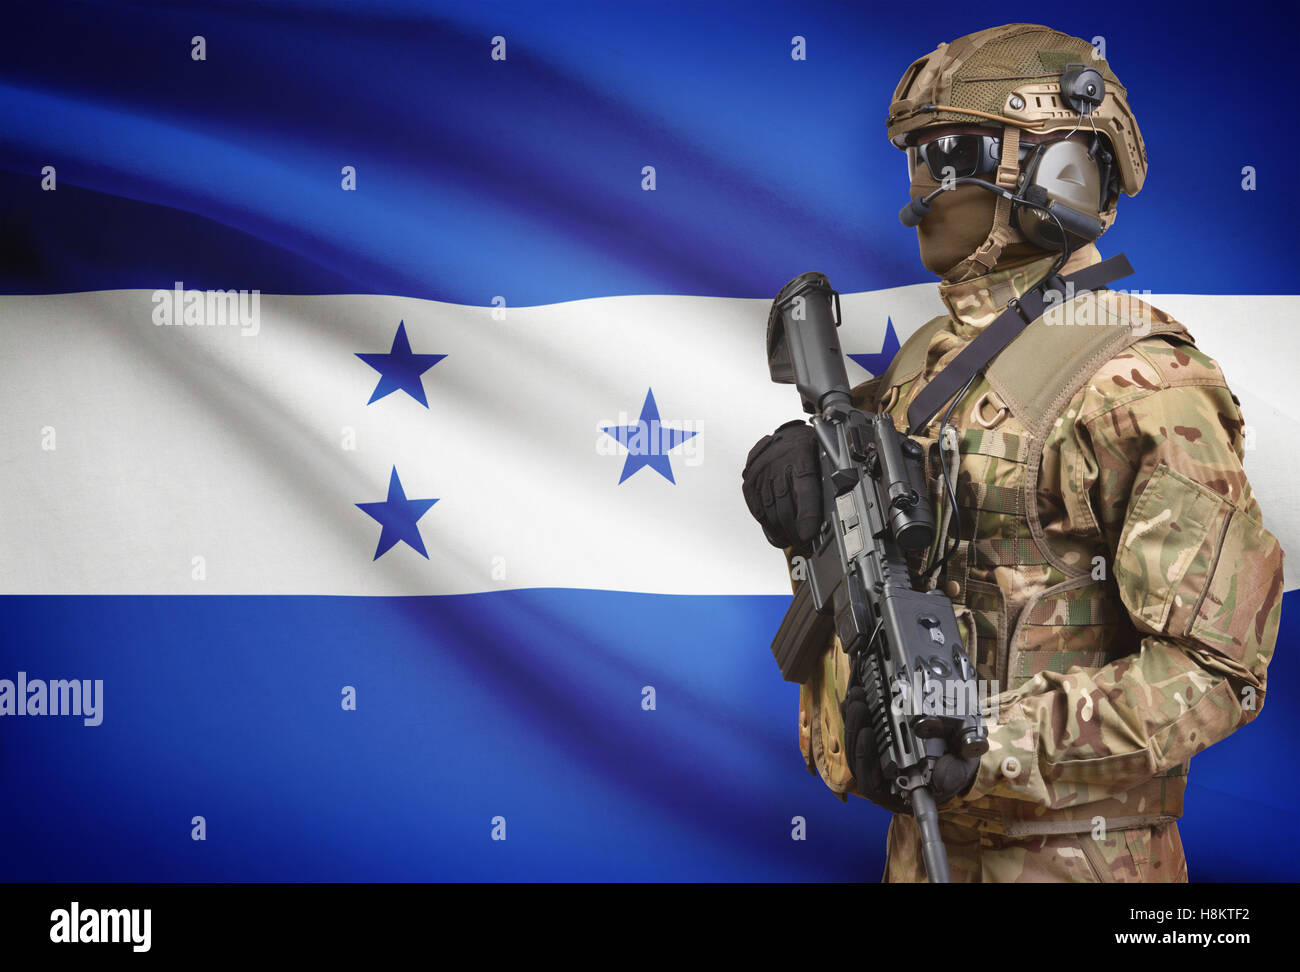 Soldier in helmet holding machine gun with national flag on background - Honduras Stock Photo